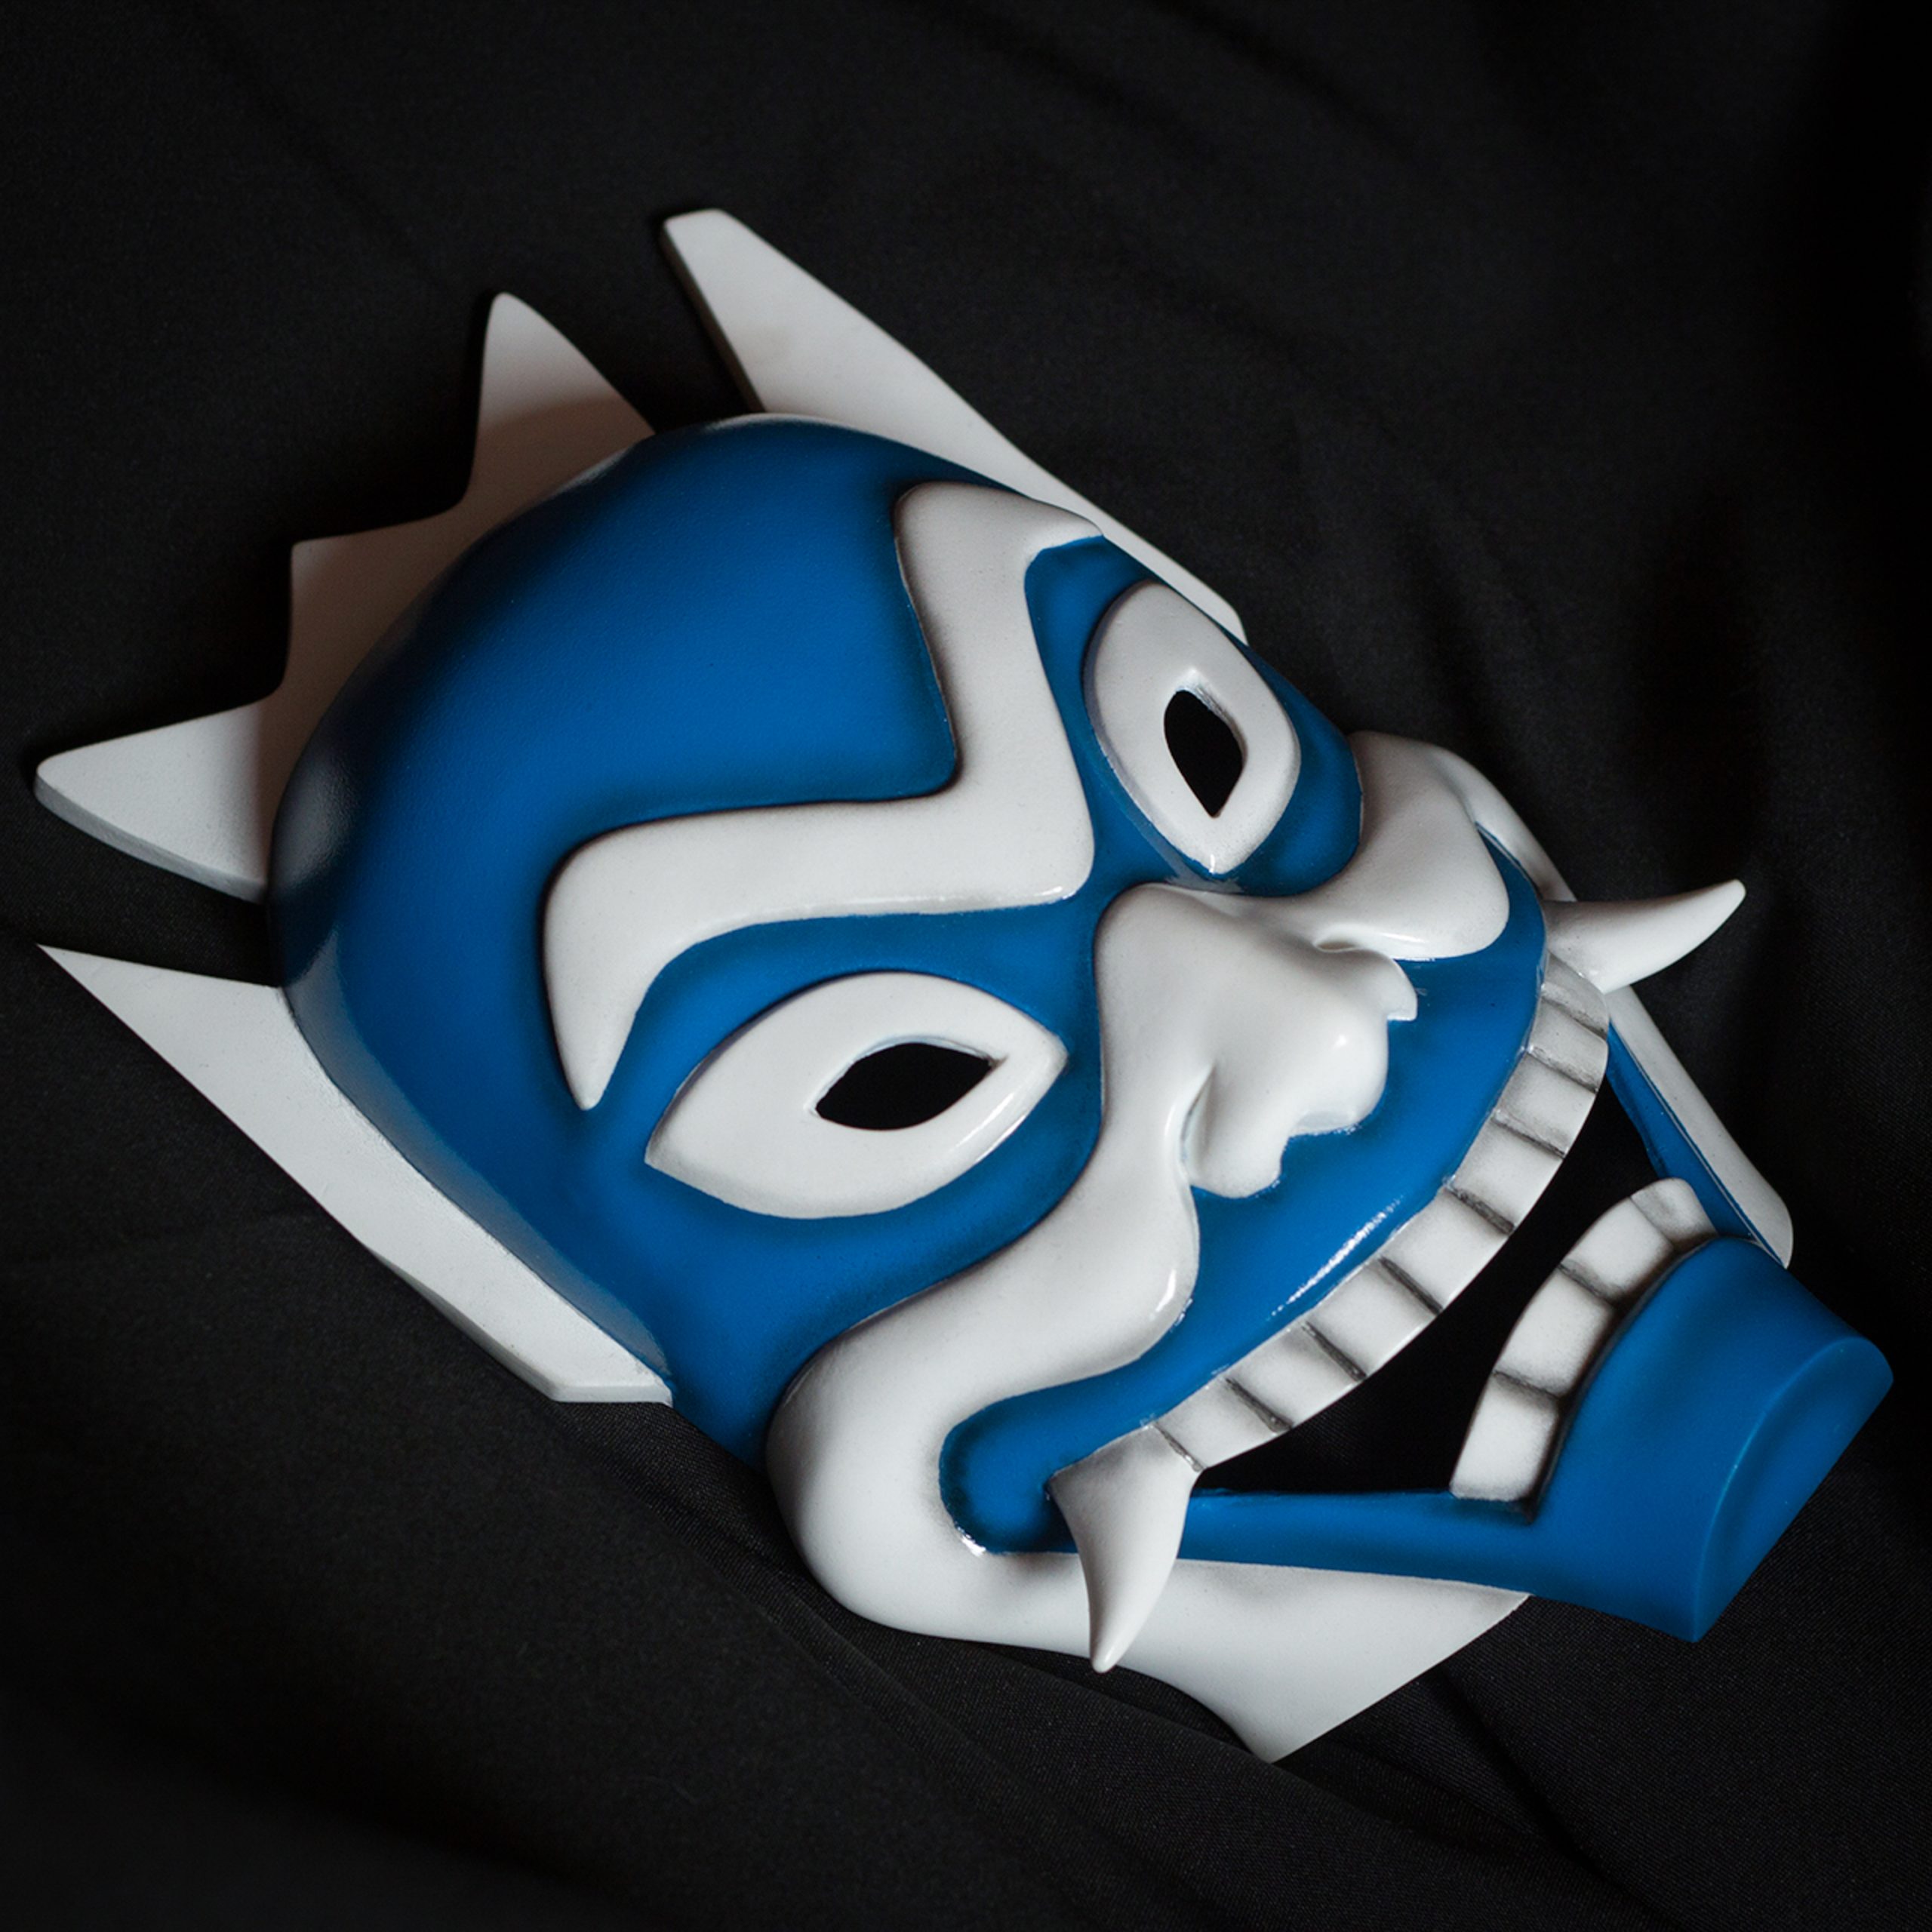 blue spirit avatar costume